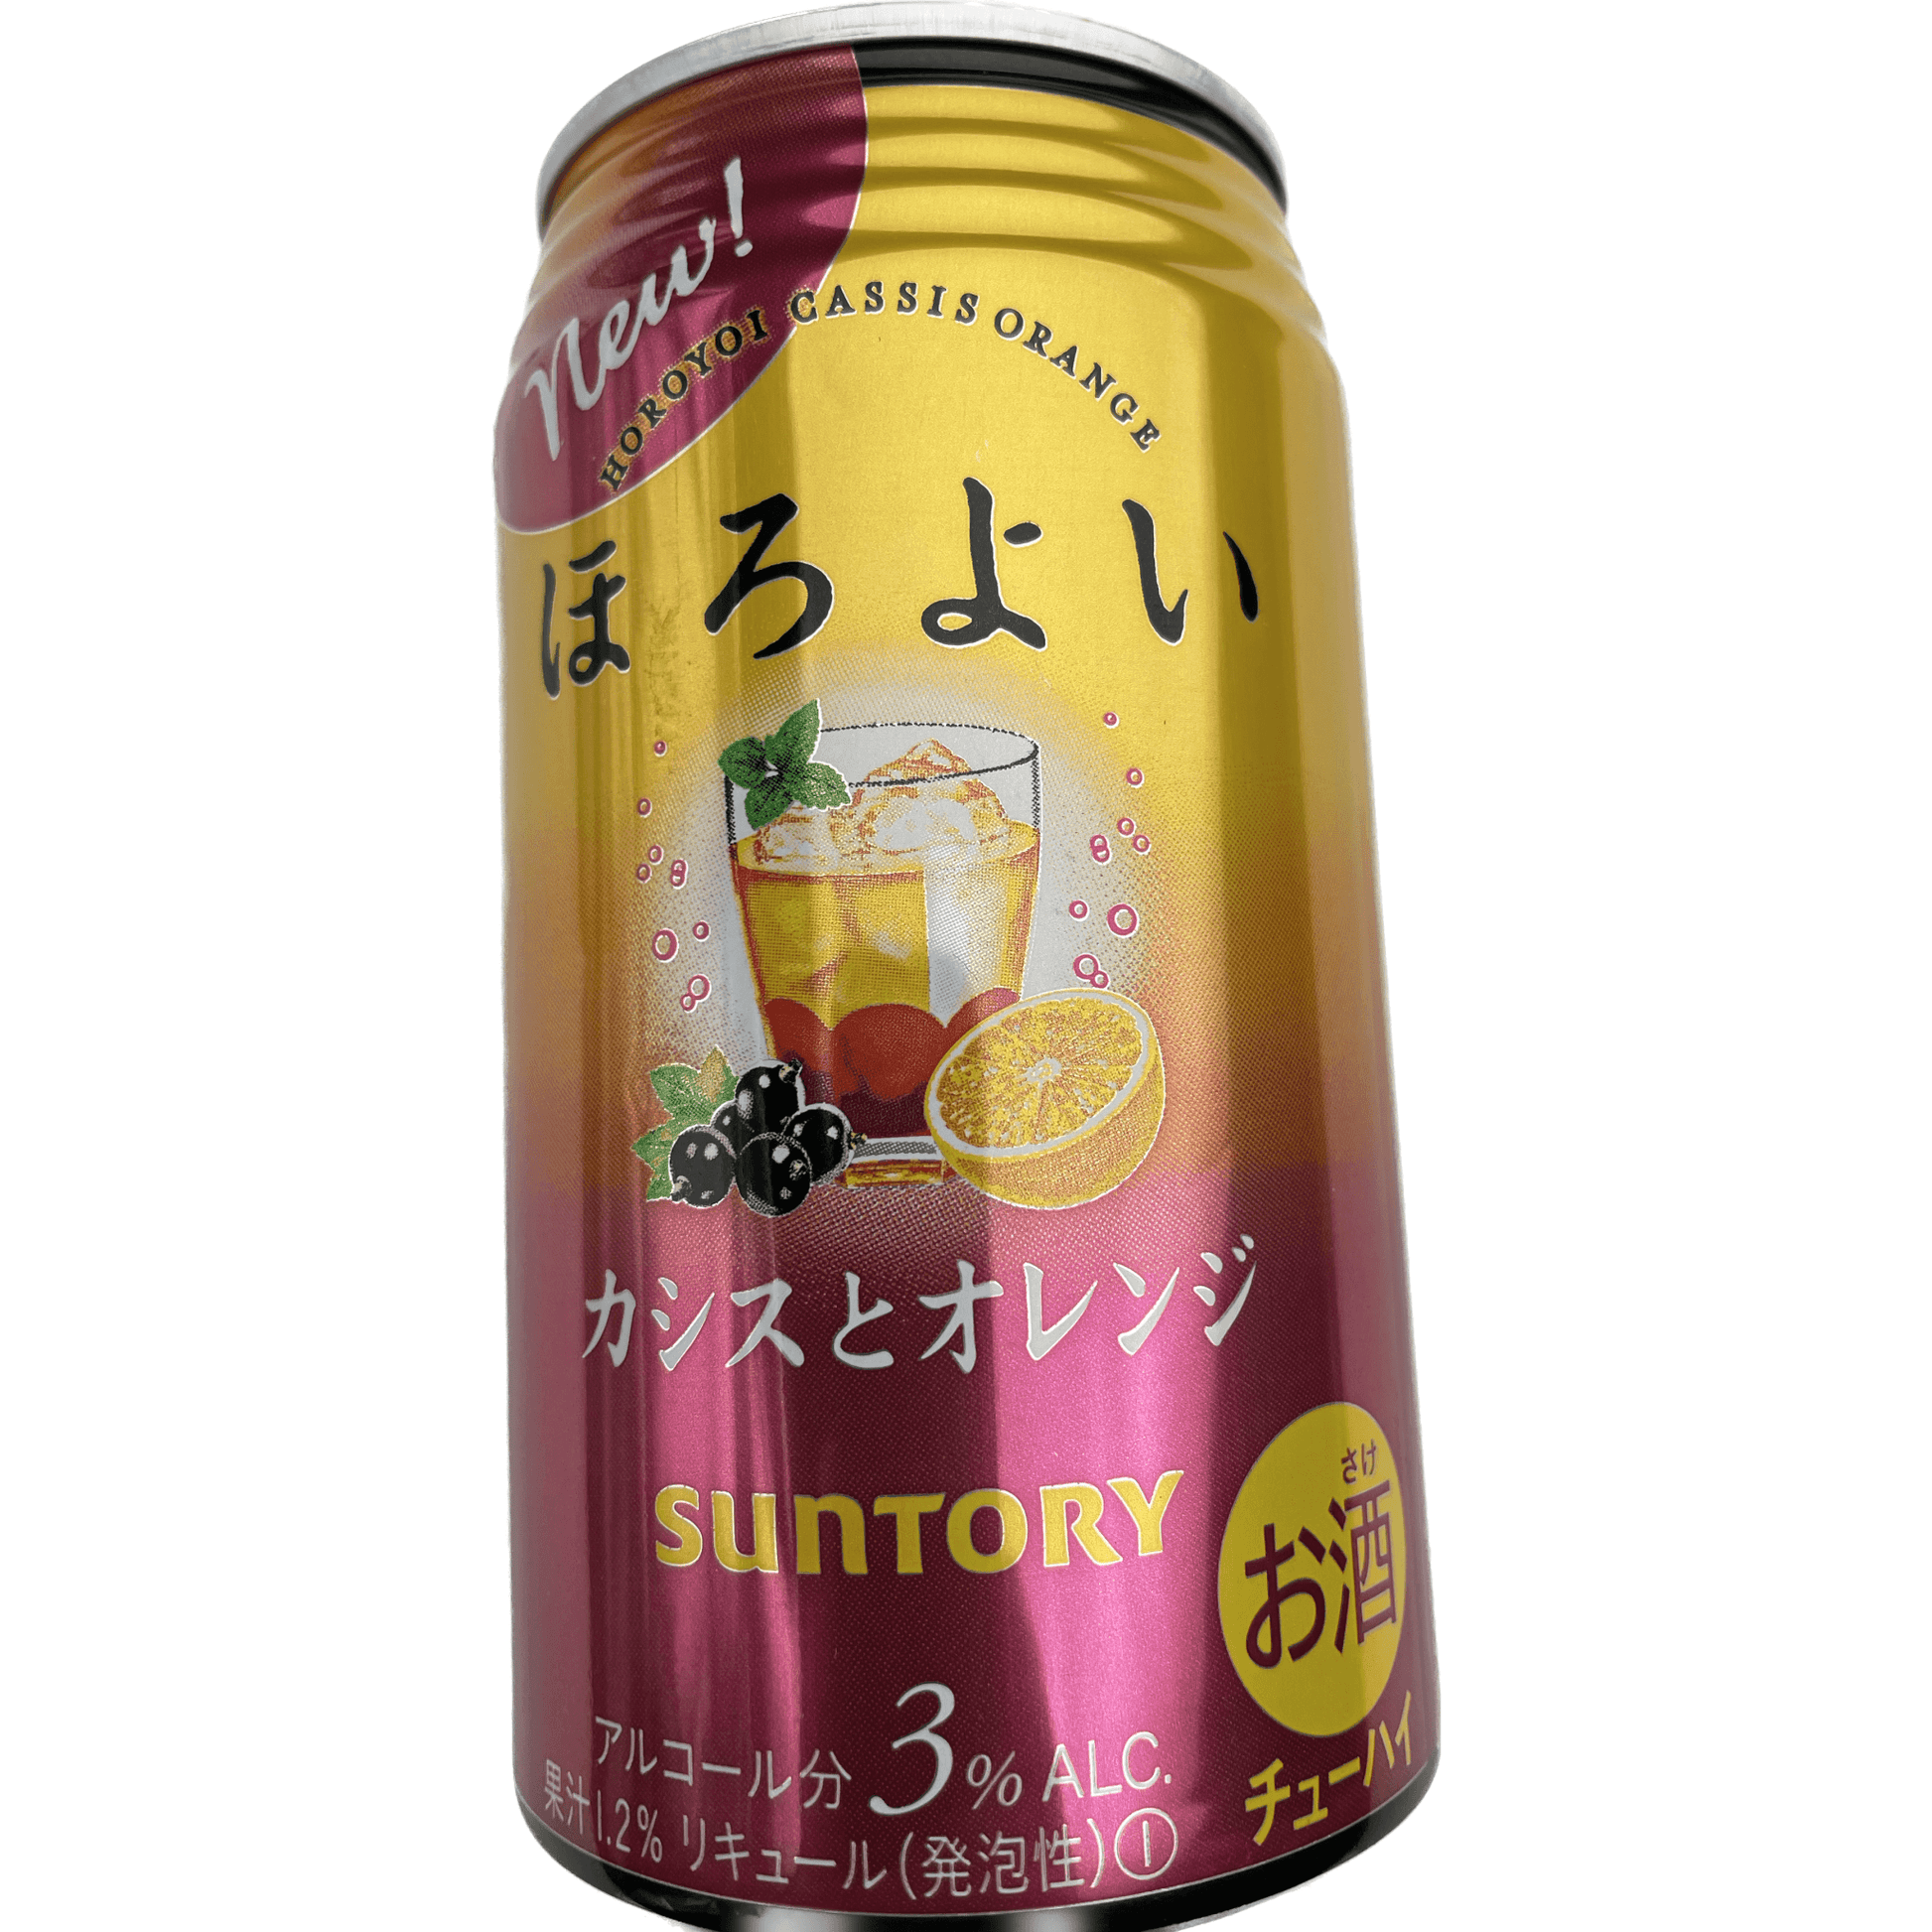 Suntory Horoyoi Cassis Orange Alc 3% 350ml / サントリー ほろよい カシスとオレンジ チューハイ 350ml - RiceWineShop